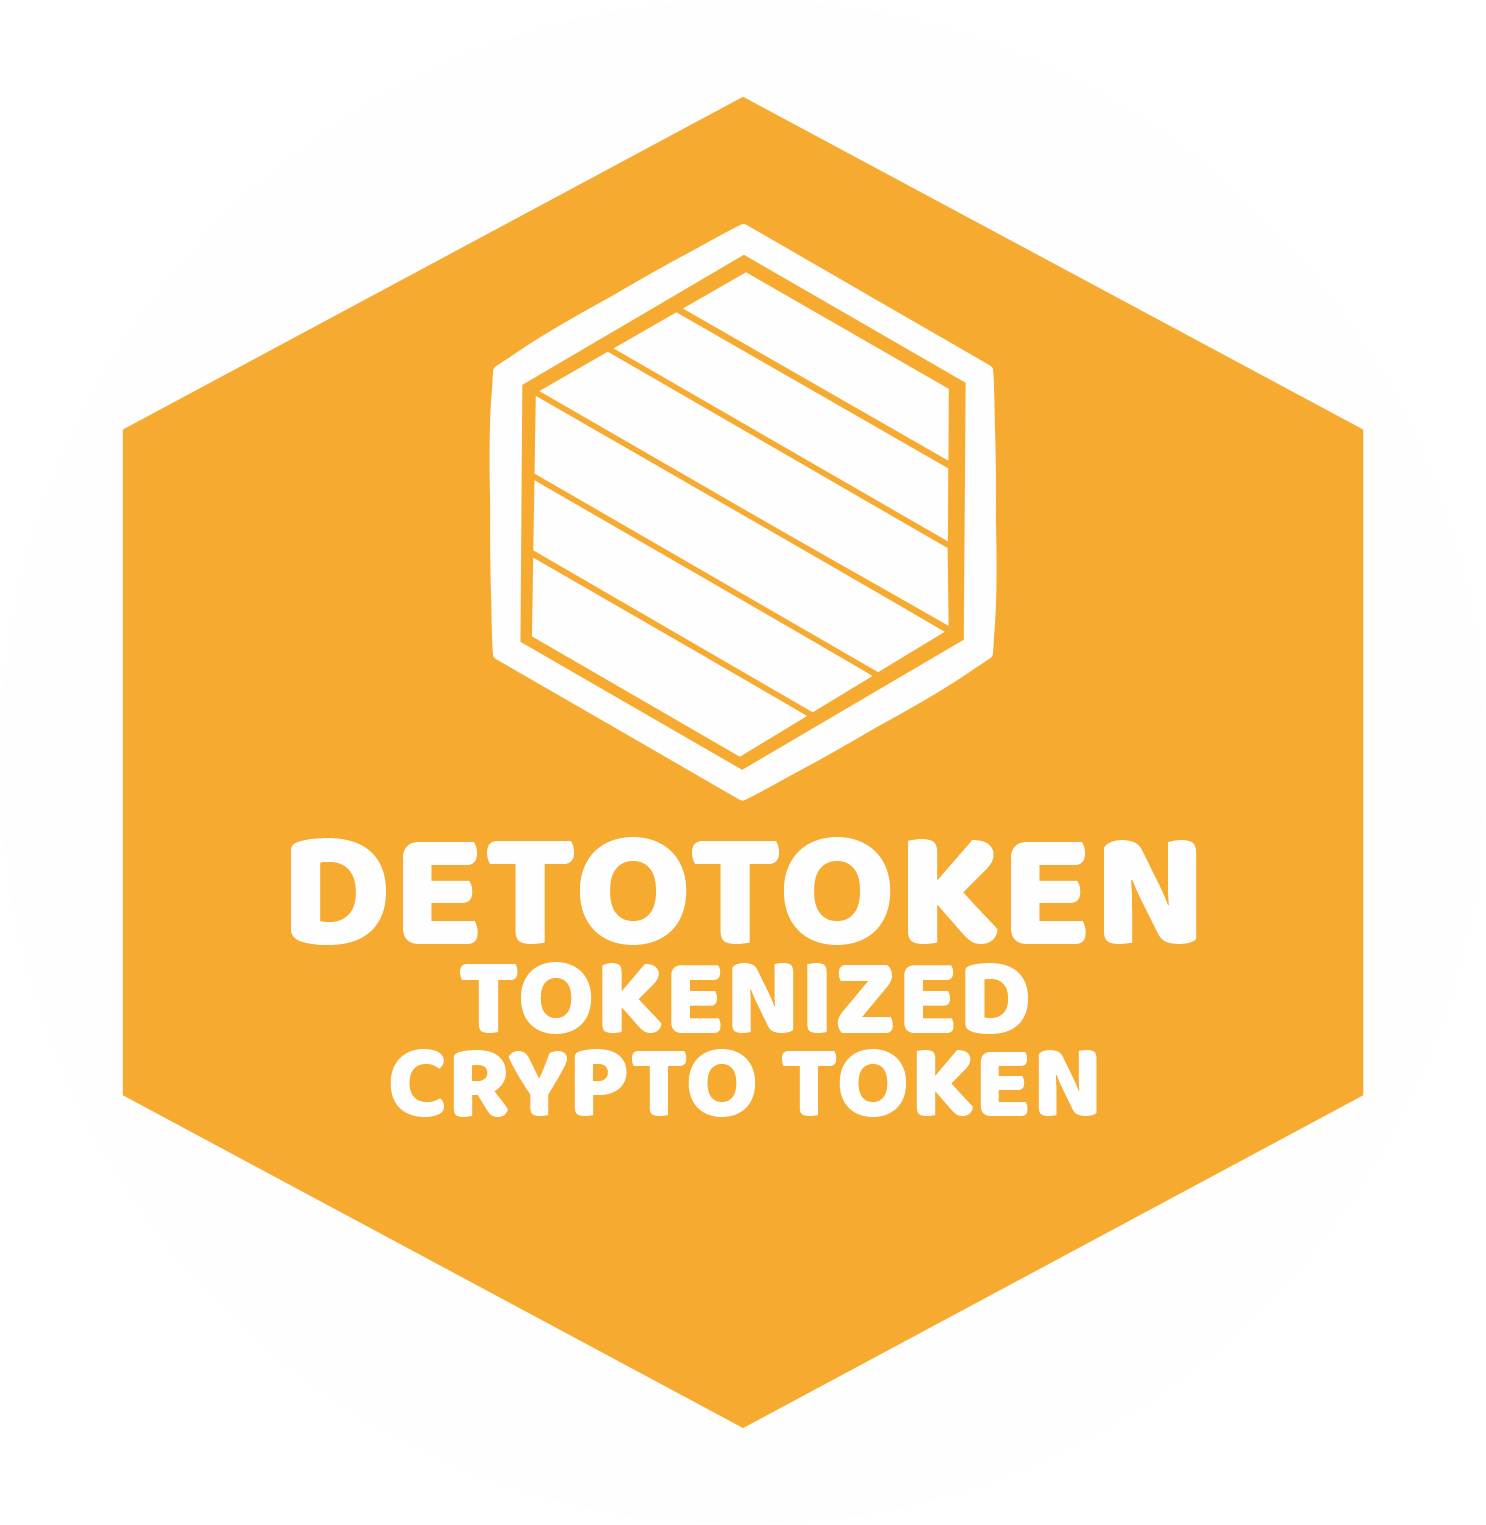 DETOTOKEN - Tokenized Crypto Token